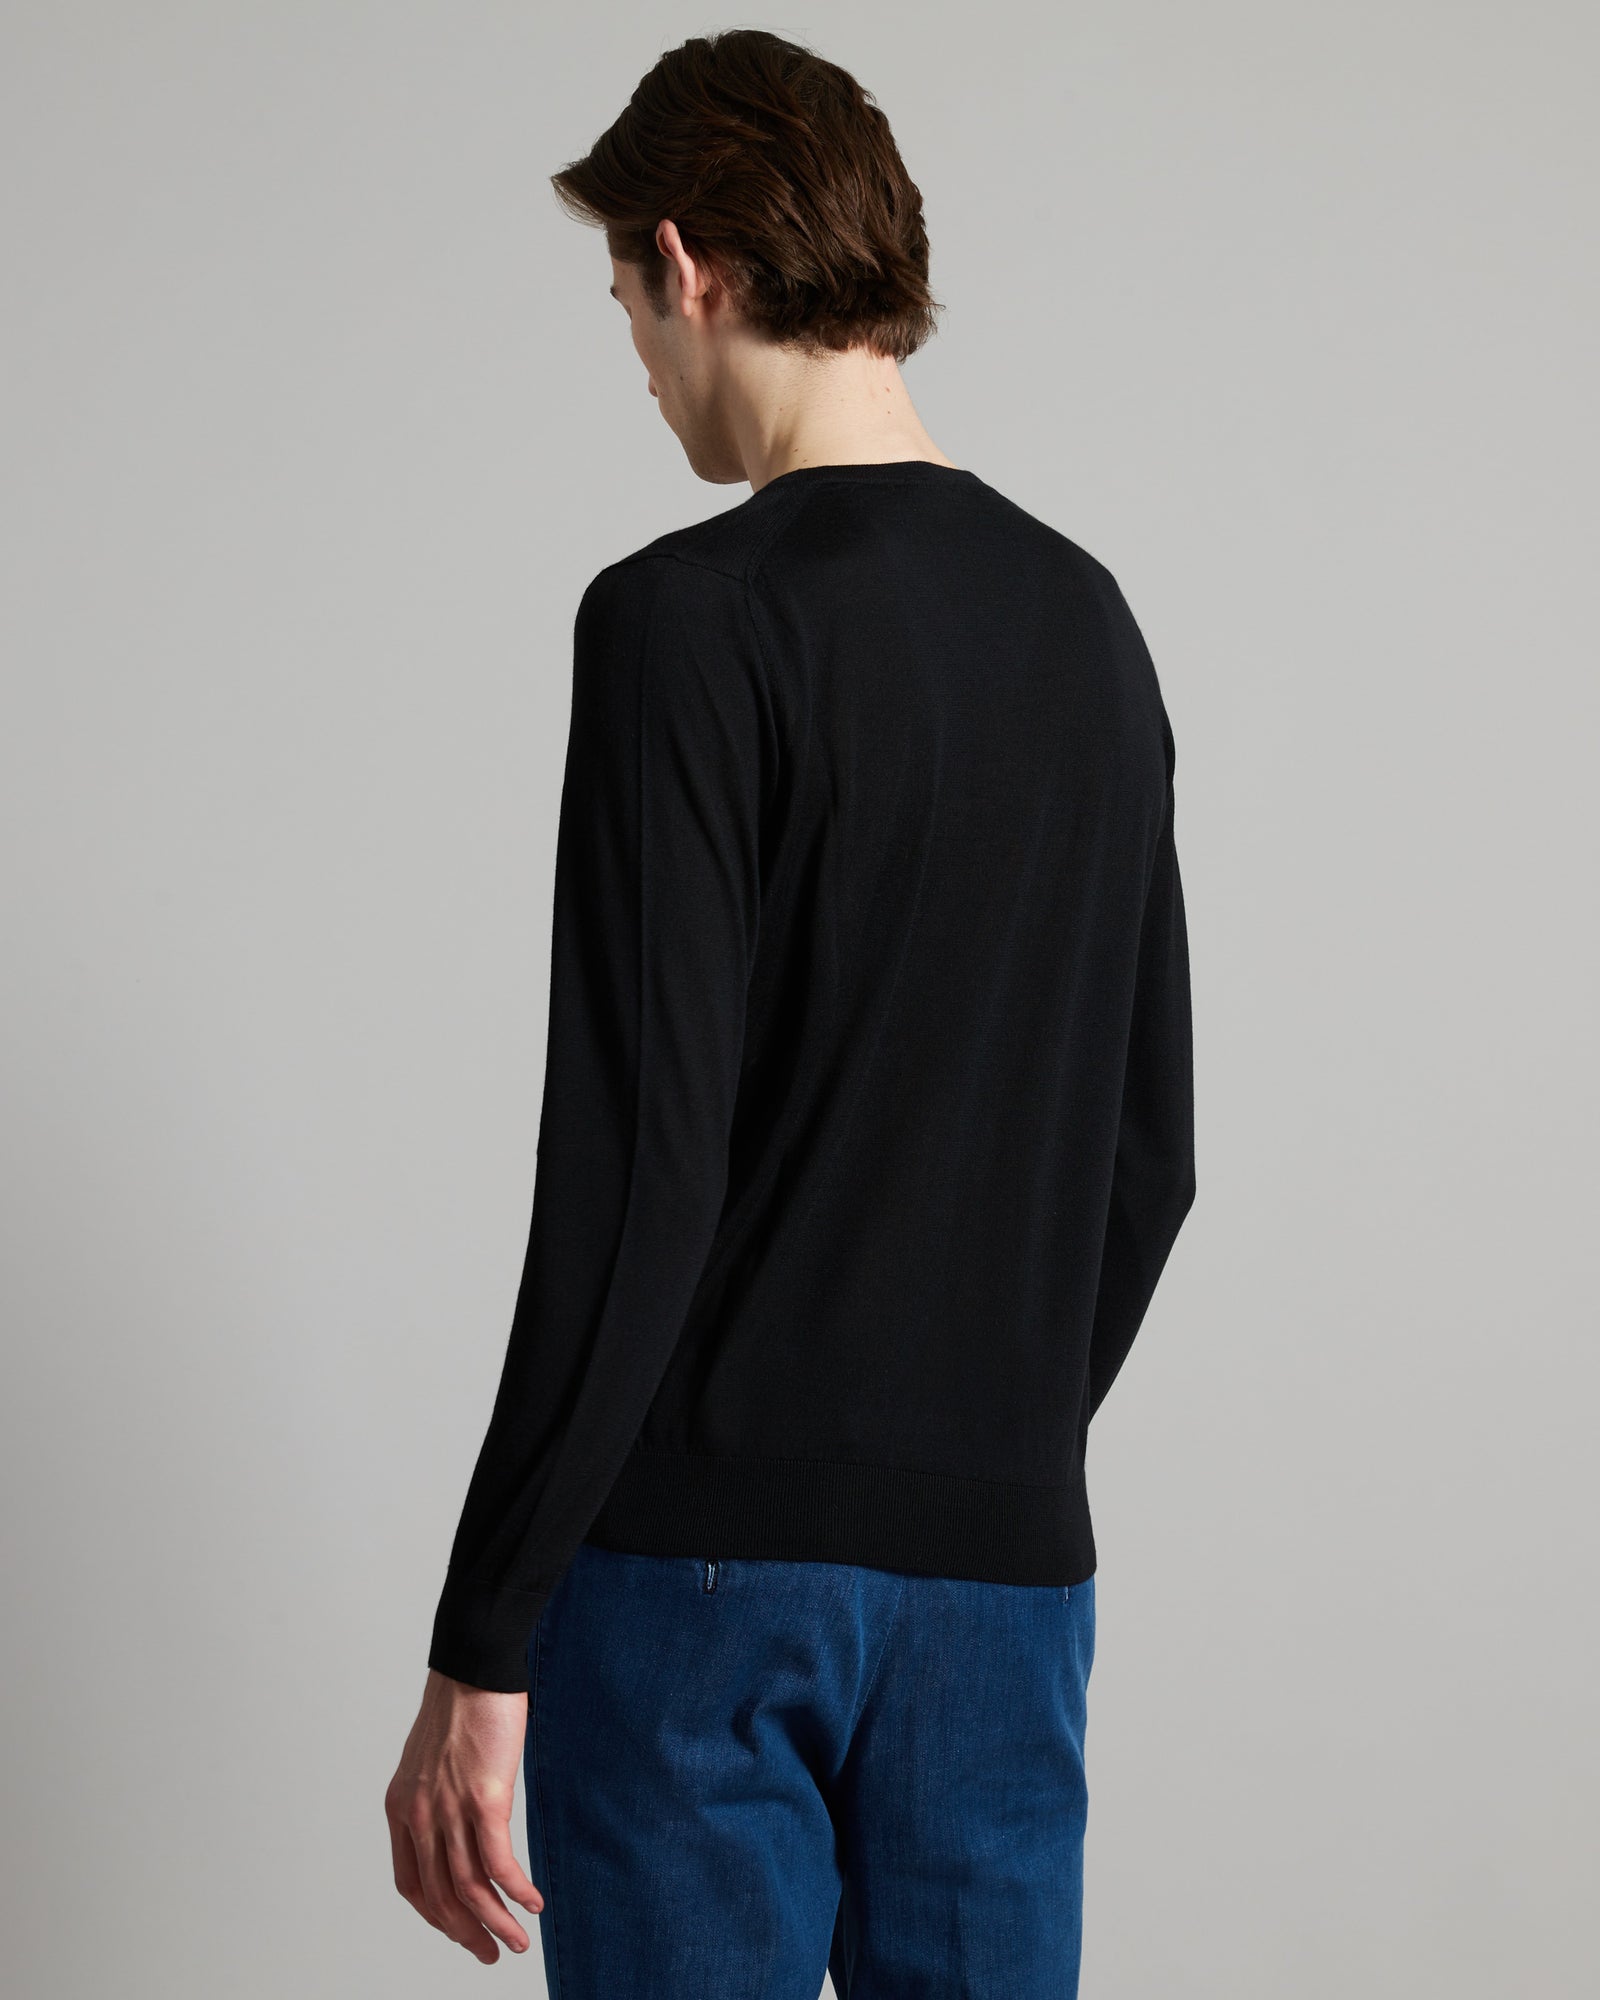 Black cashmere and silk men's V-neck sweater